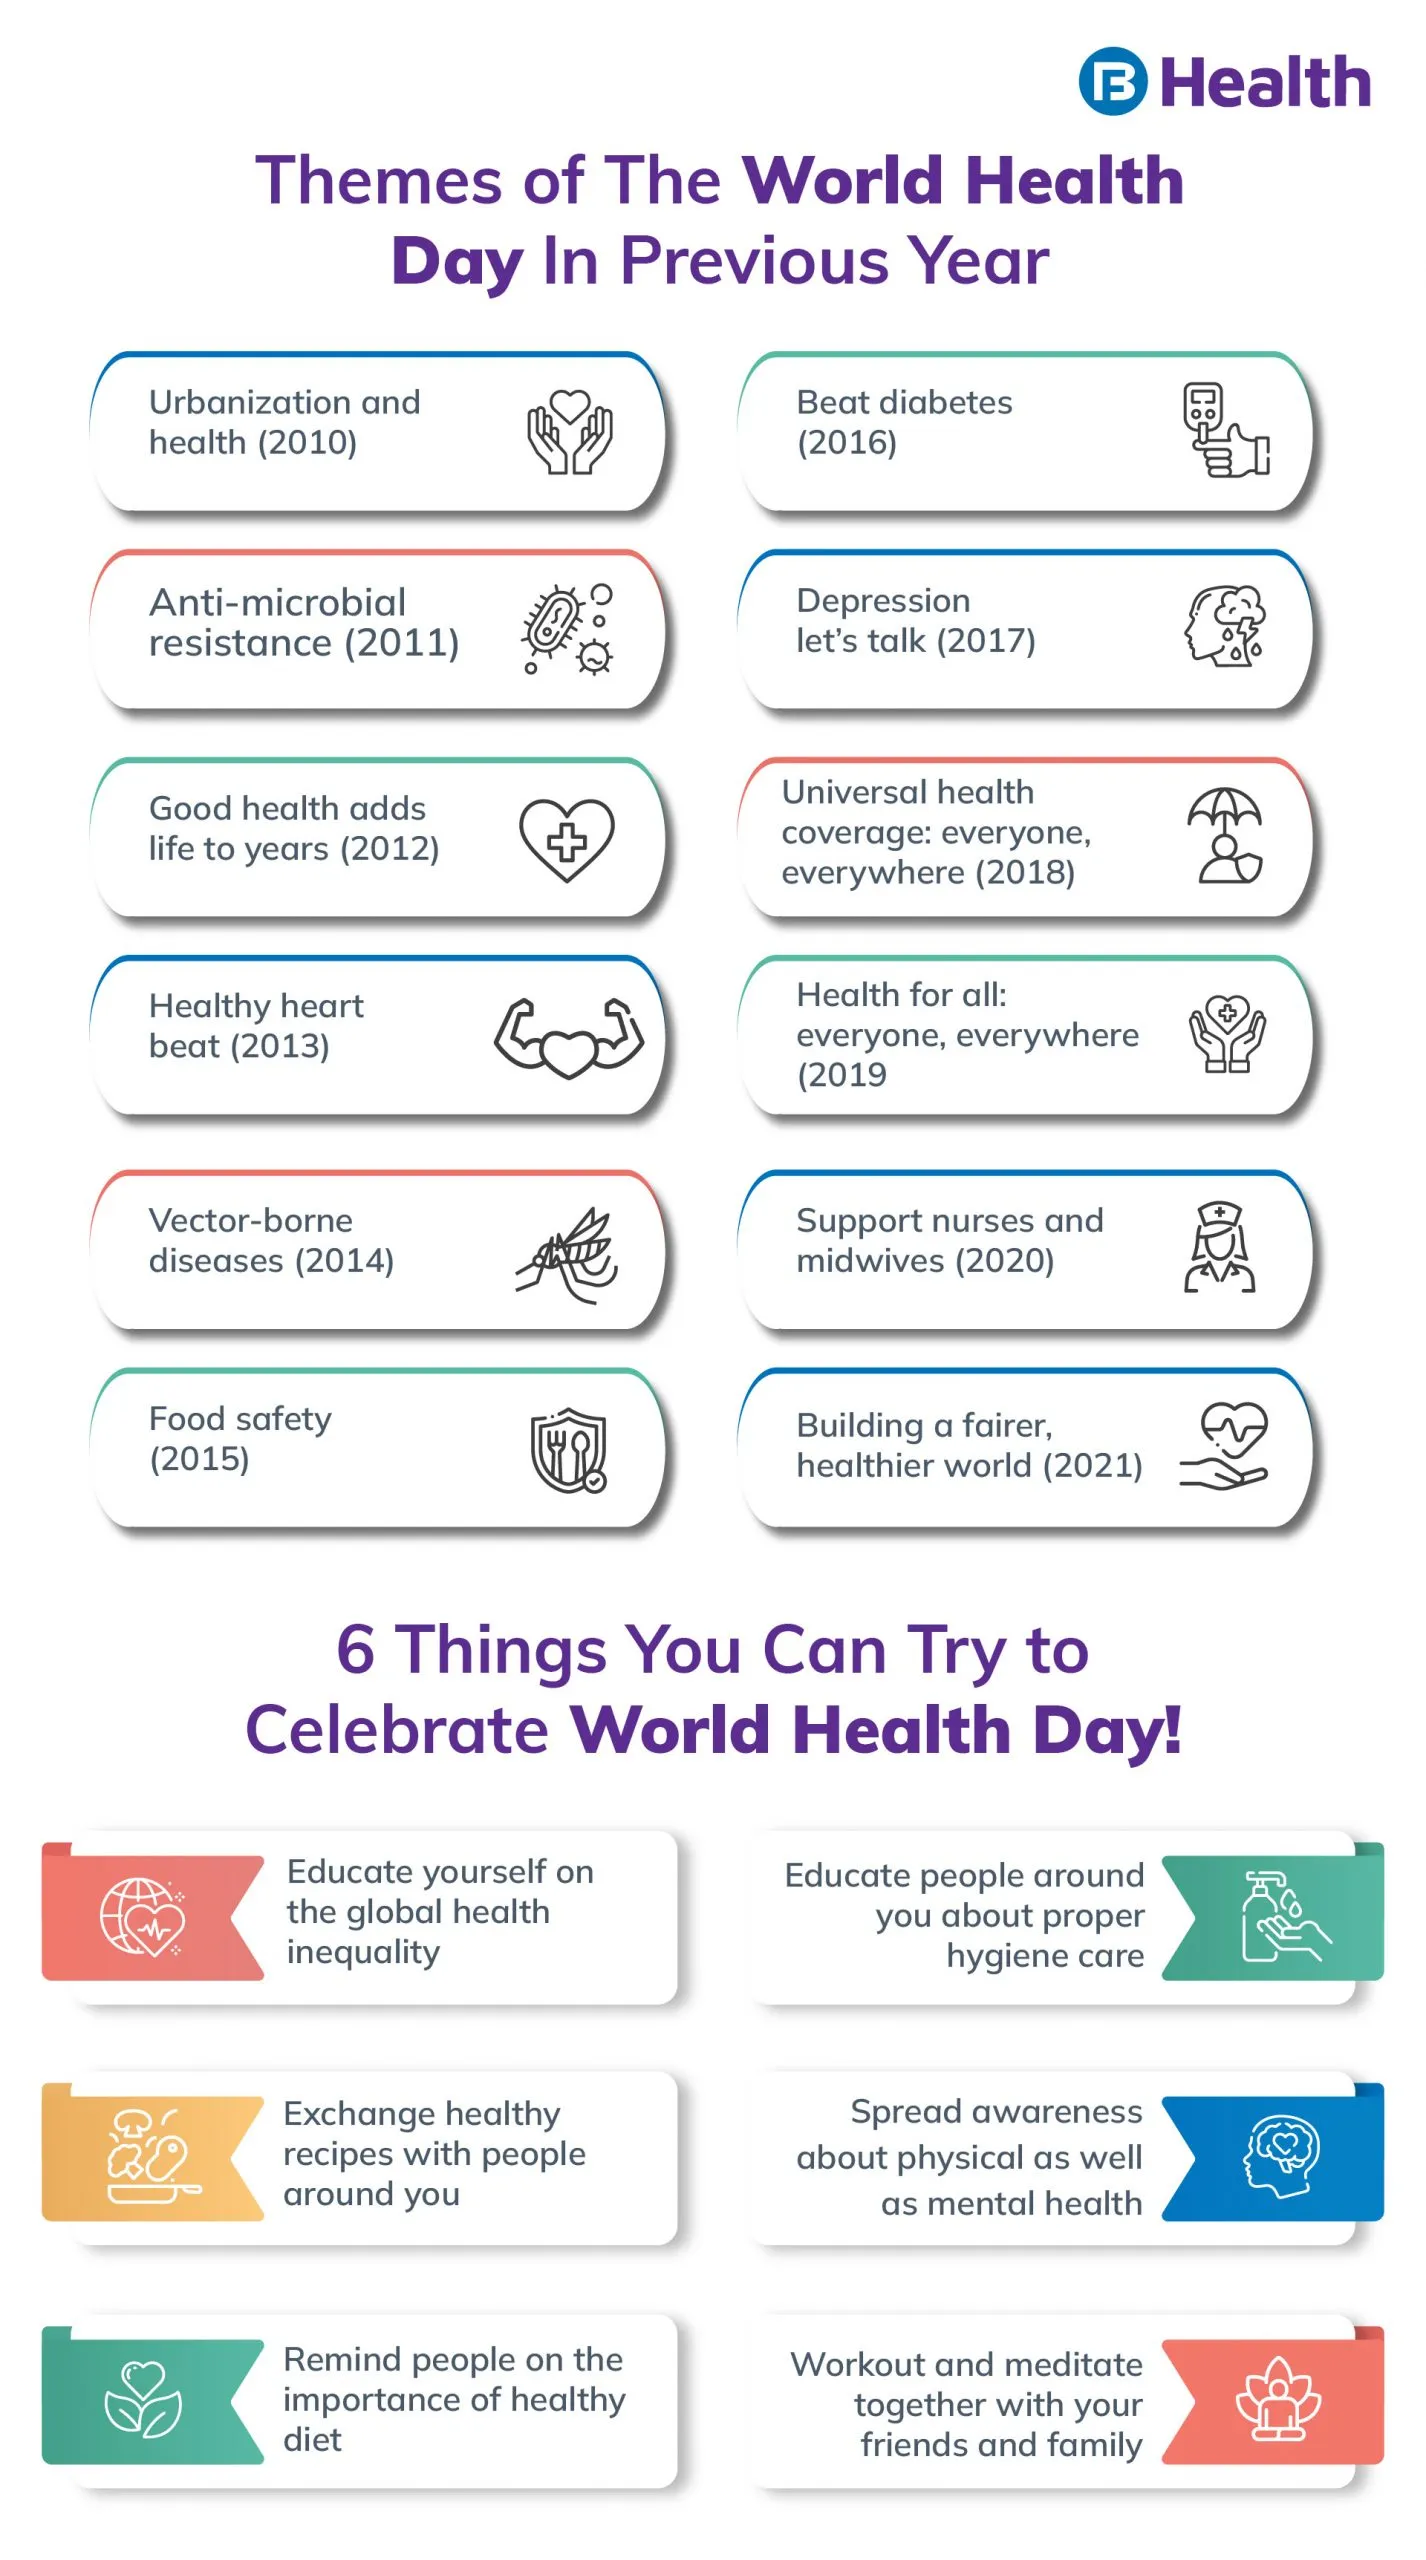 World Health Day celebration ideas